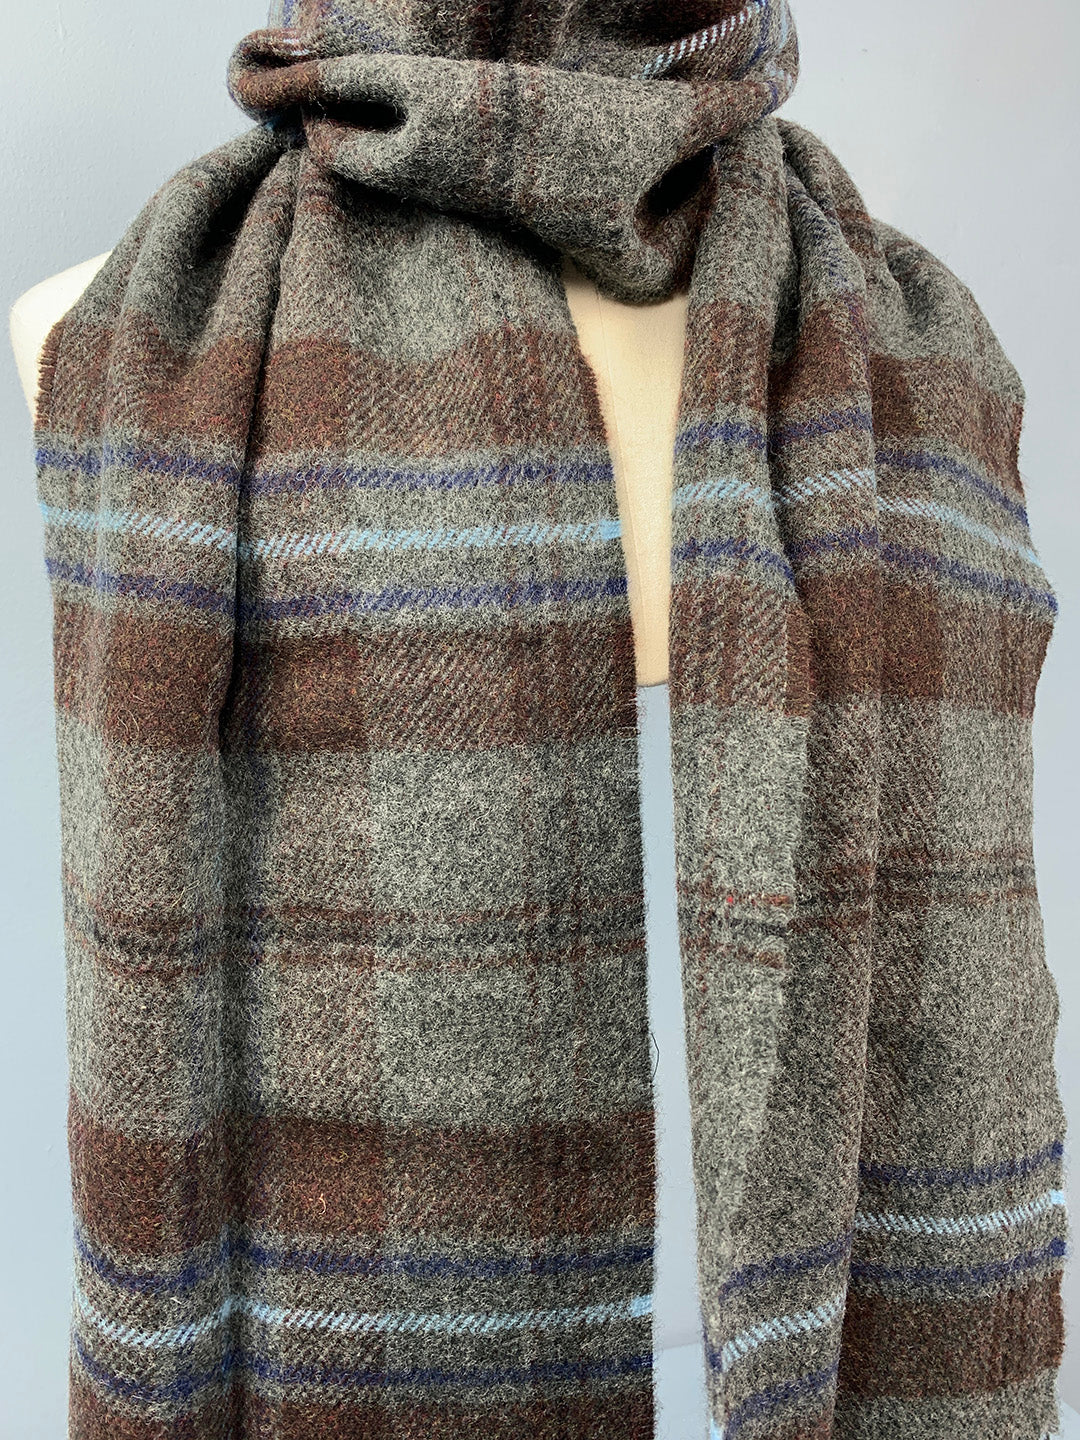 Scottish scarf with brown, blue and dark grey checks